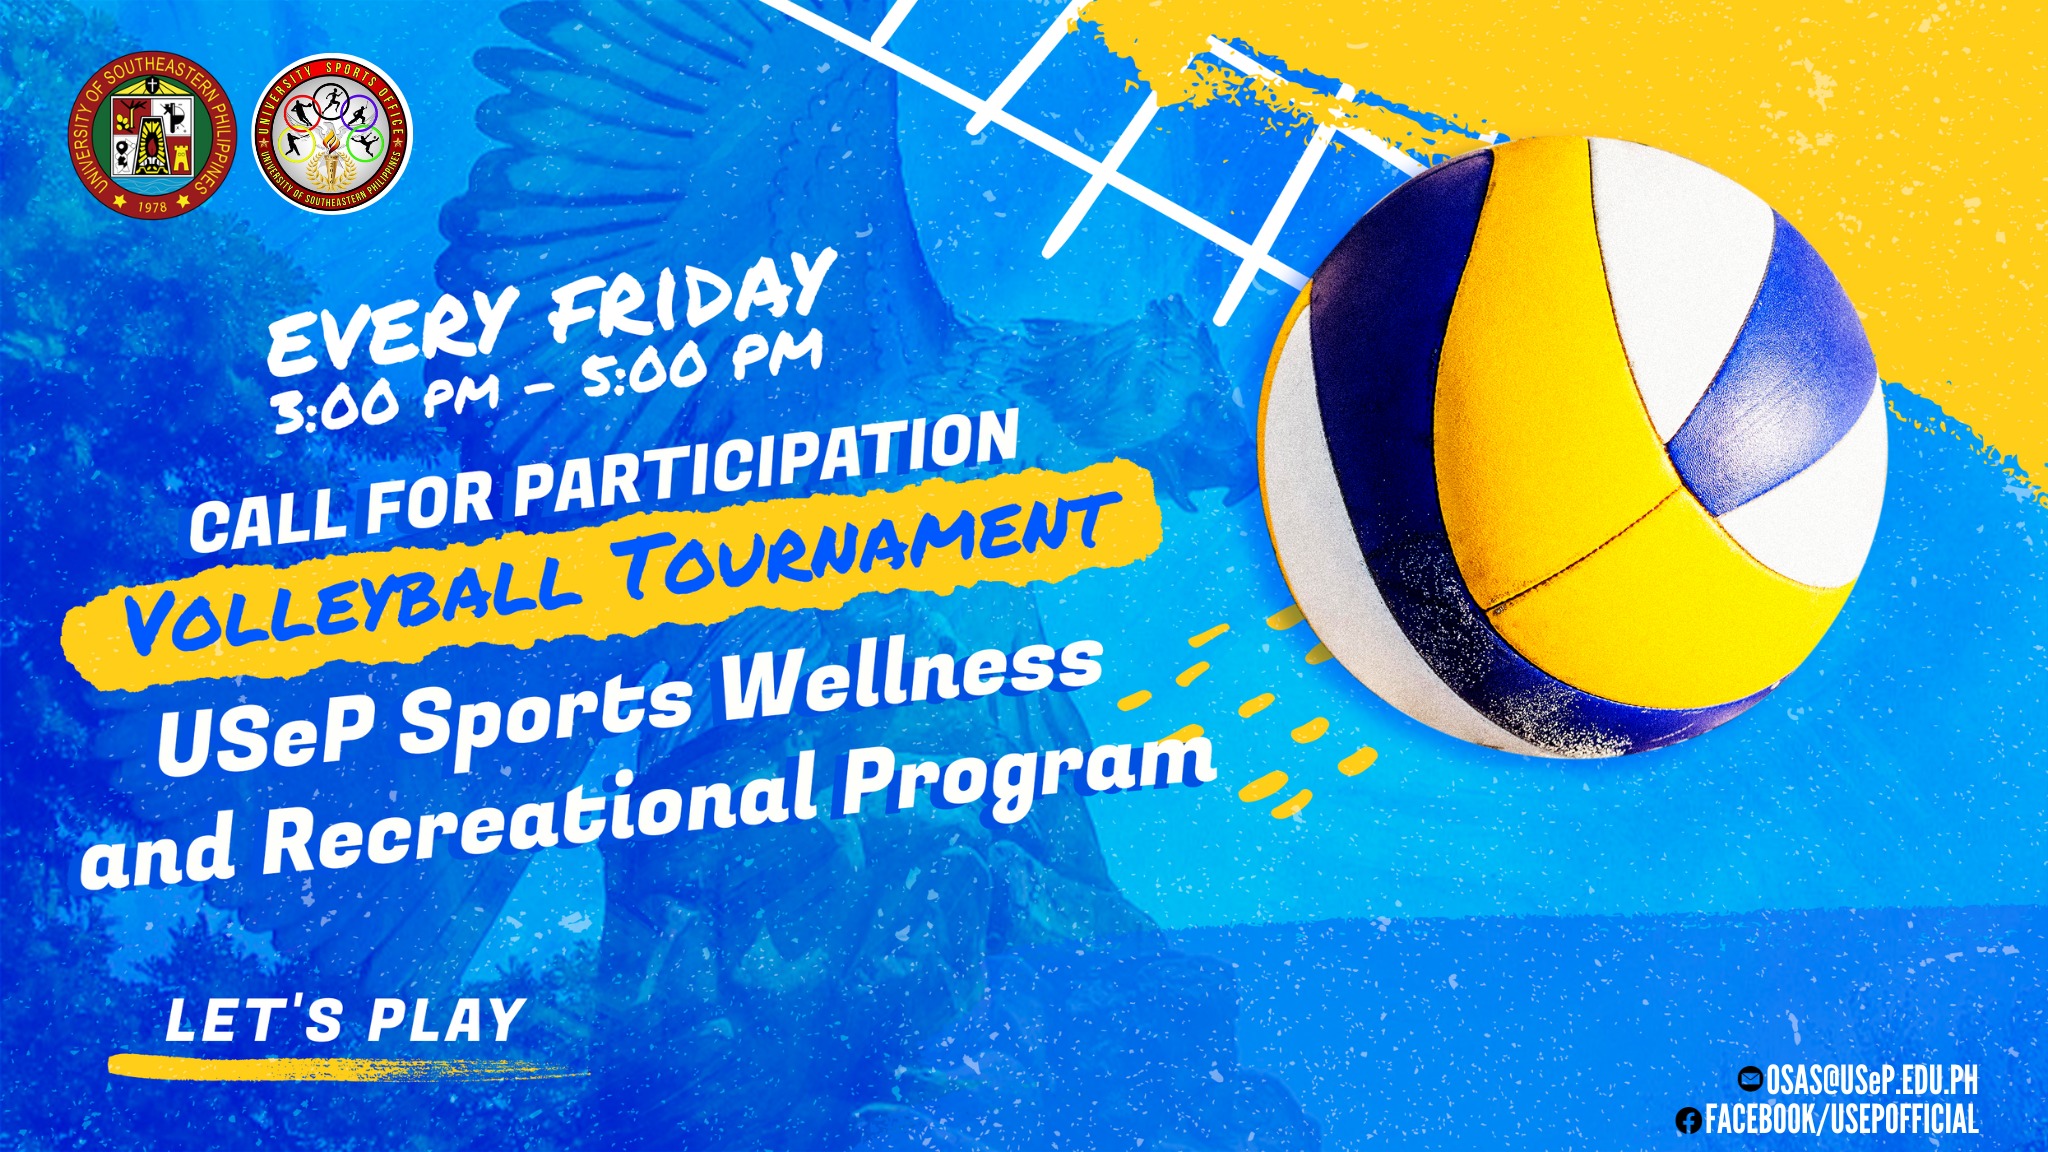 USeP Sports Wellness and Recreational Program (Volleyball Tournament)